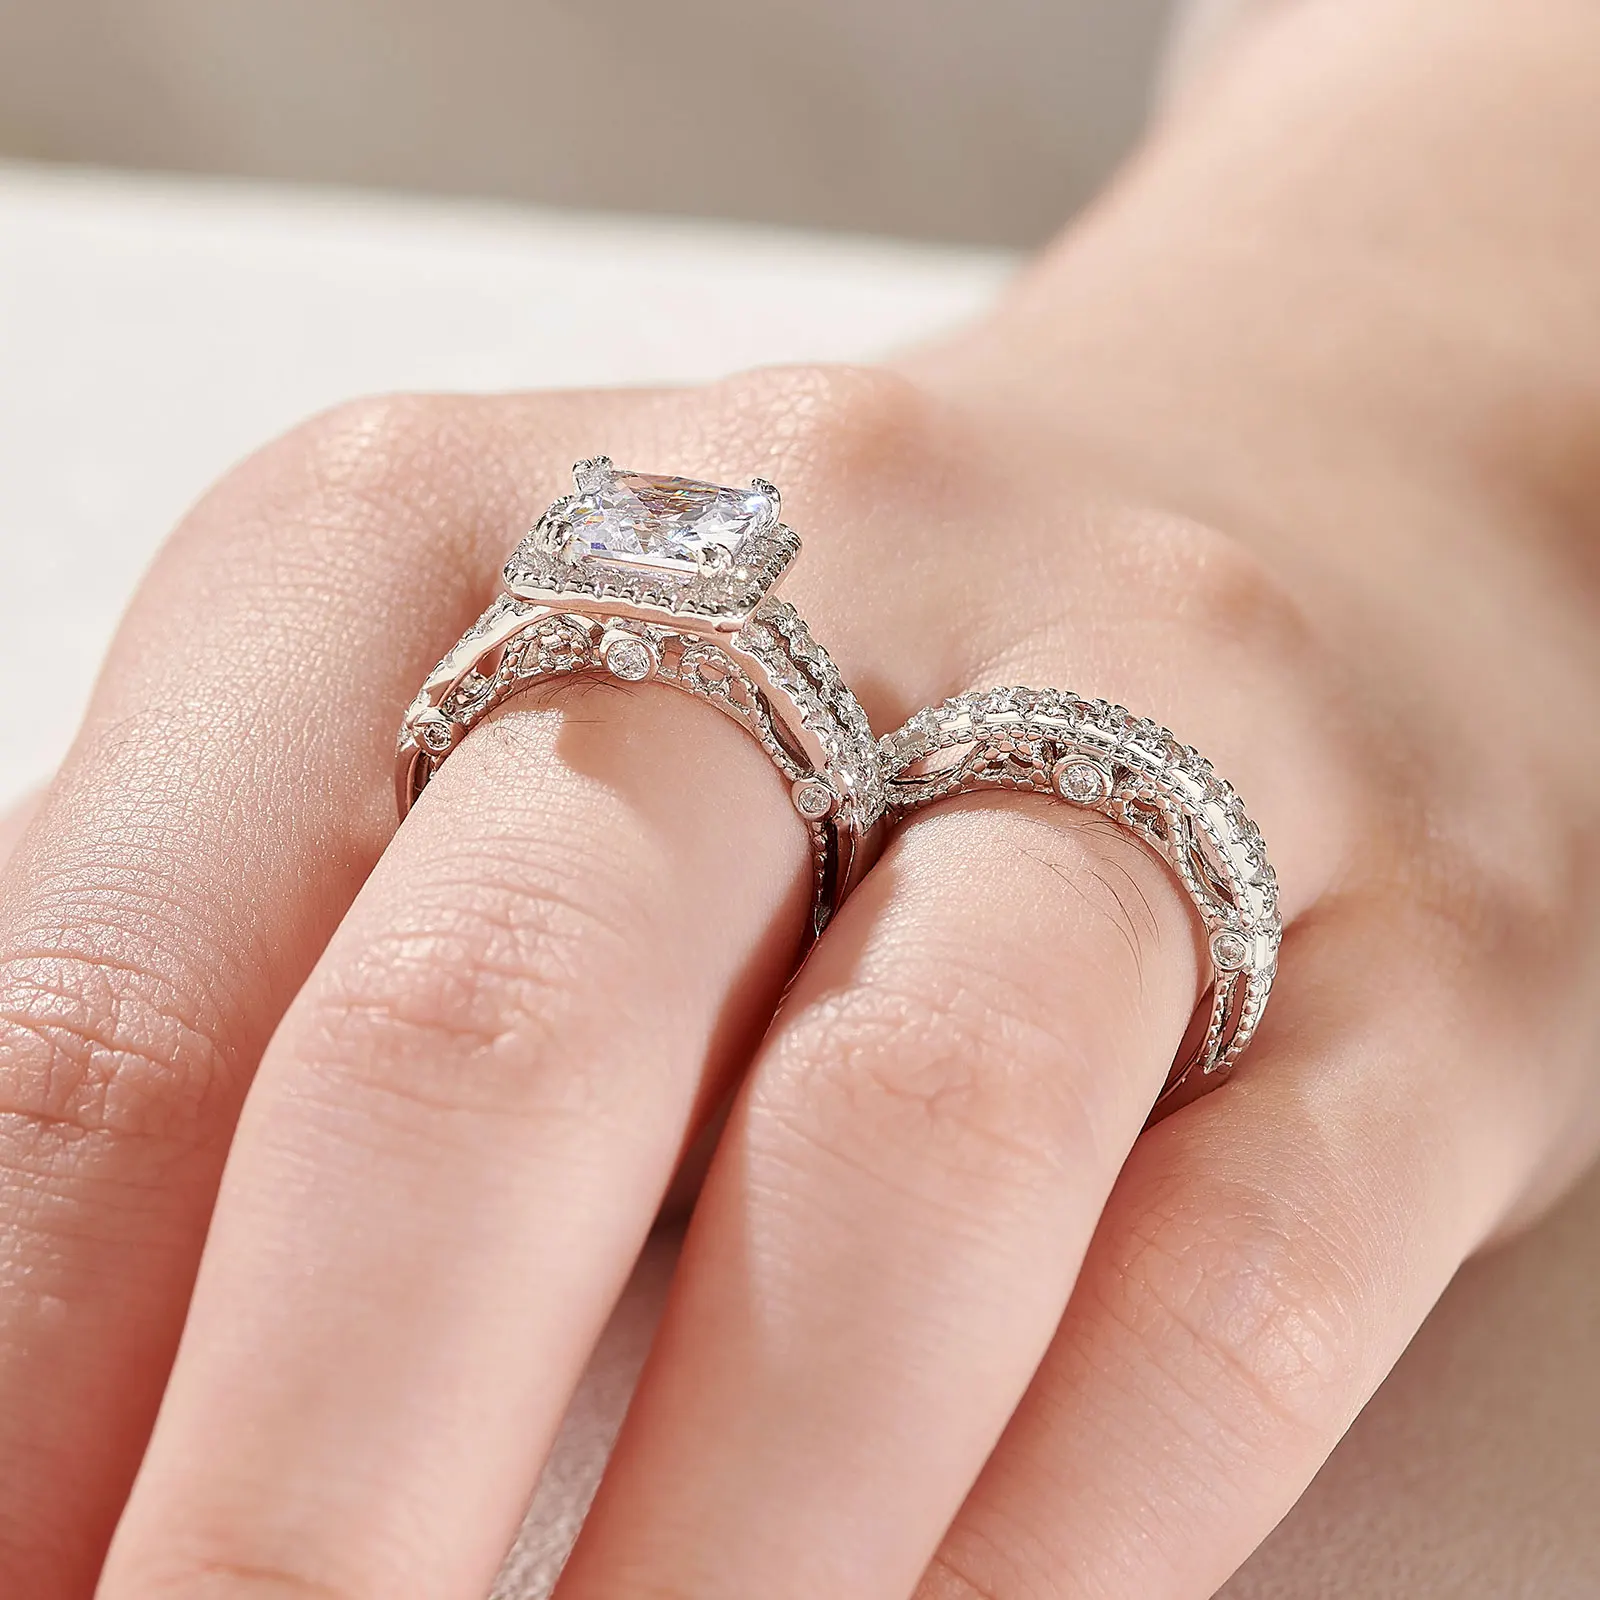 2.26 CT Simulated Diamond Bridal Wedding Engagement Ring Set 14K White Gold  Over